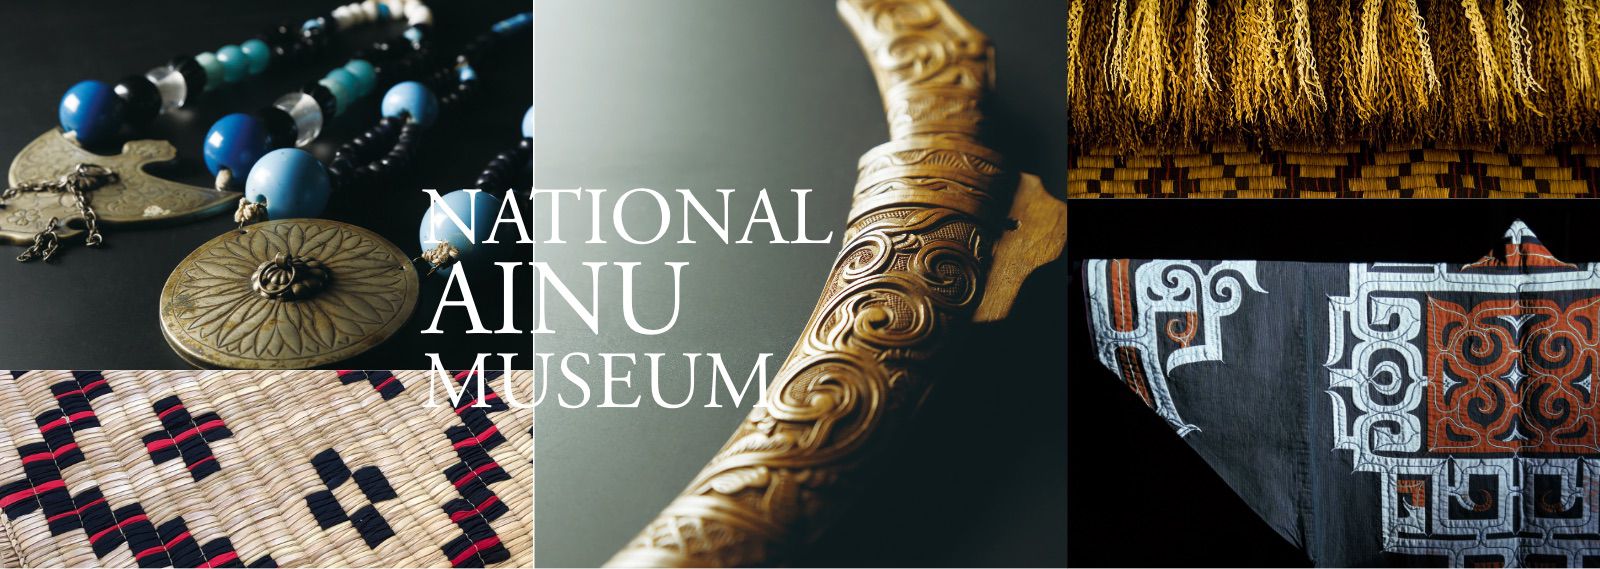 NATIONAL AINU MUSEUM